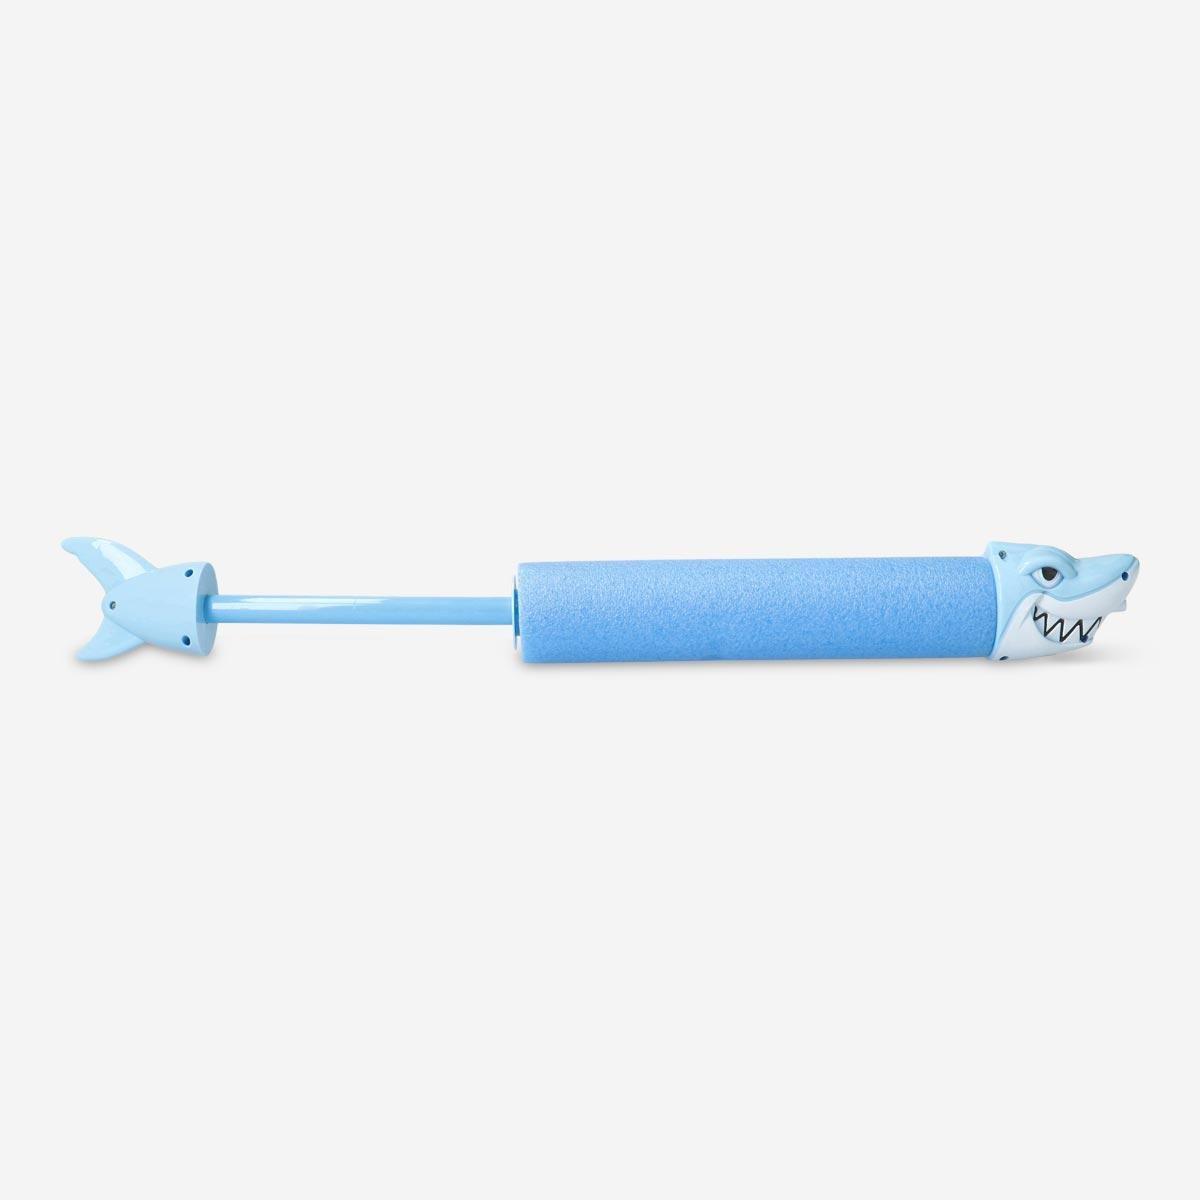 Blue water pump toy